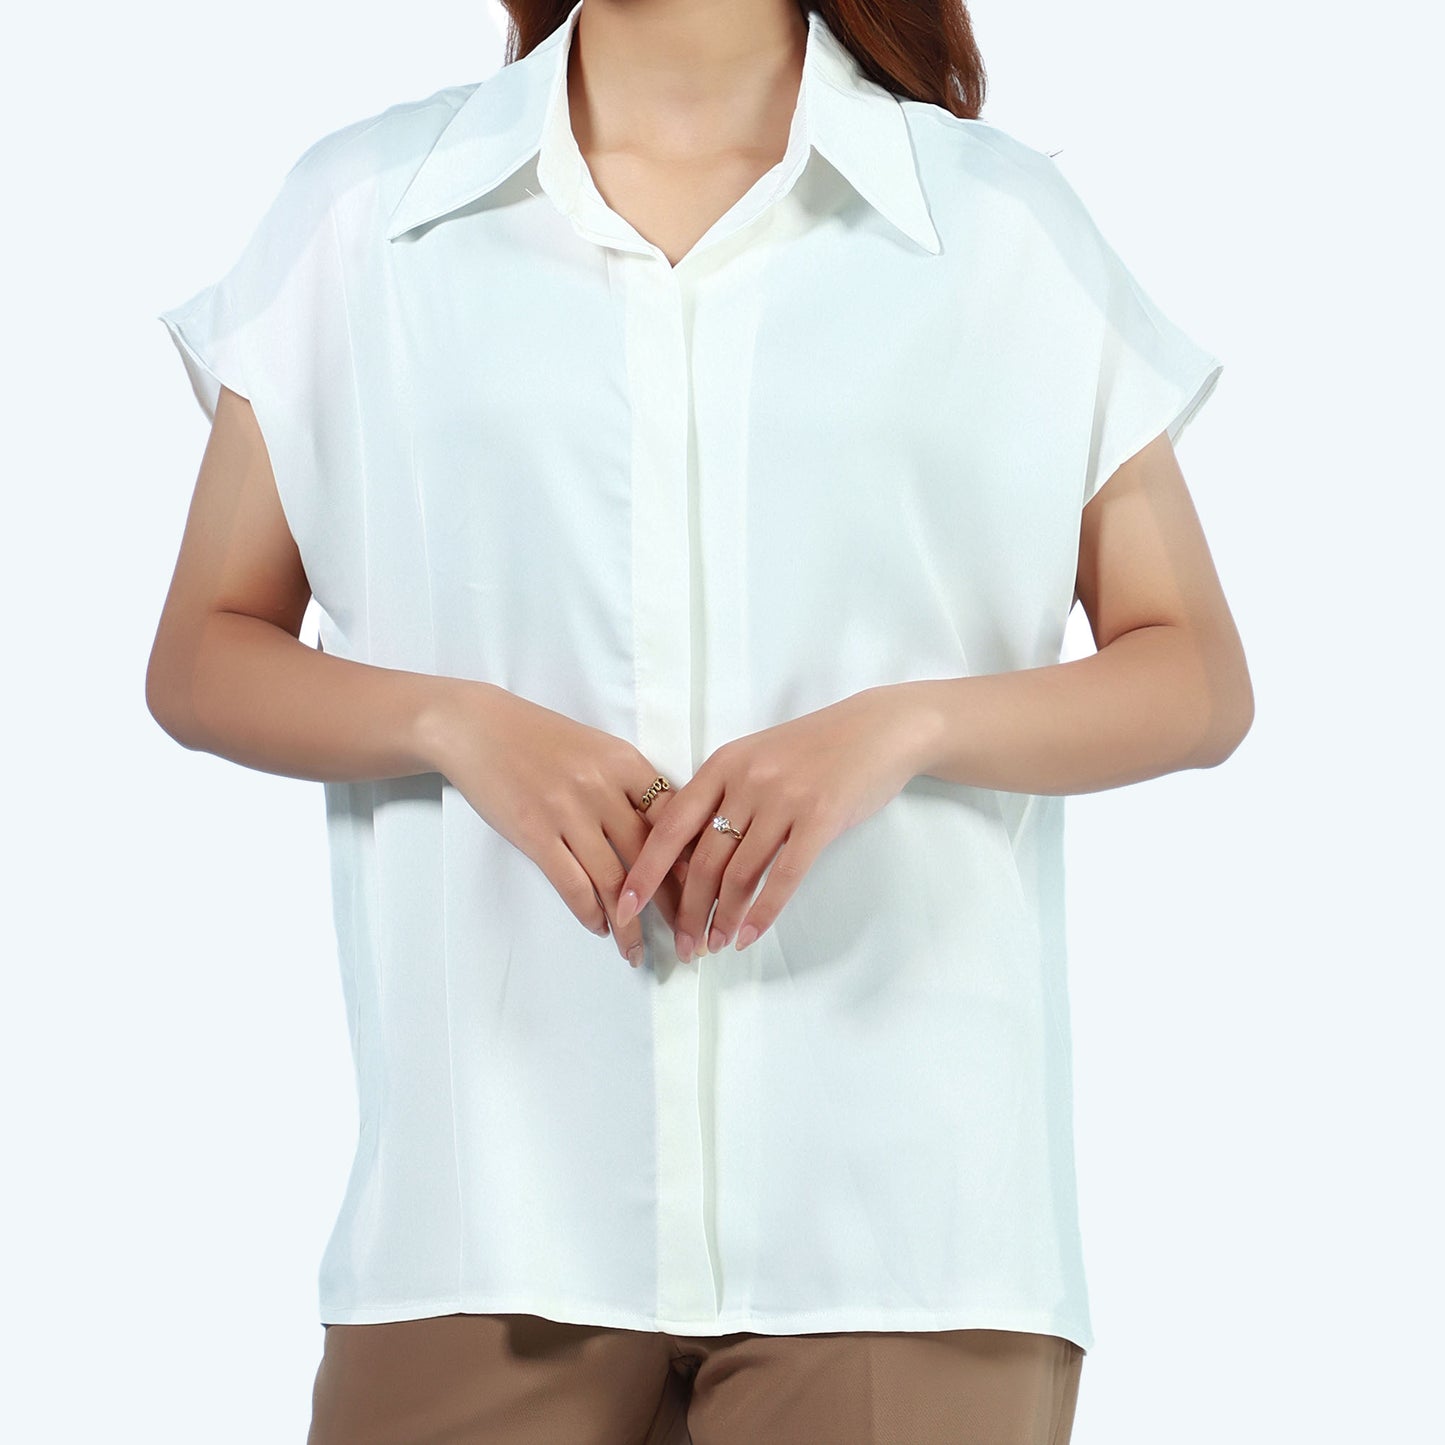 Cap sleeve Semi Formal Tshirt With Collar